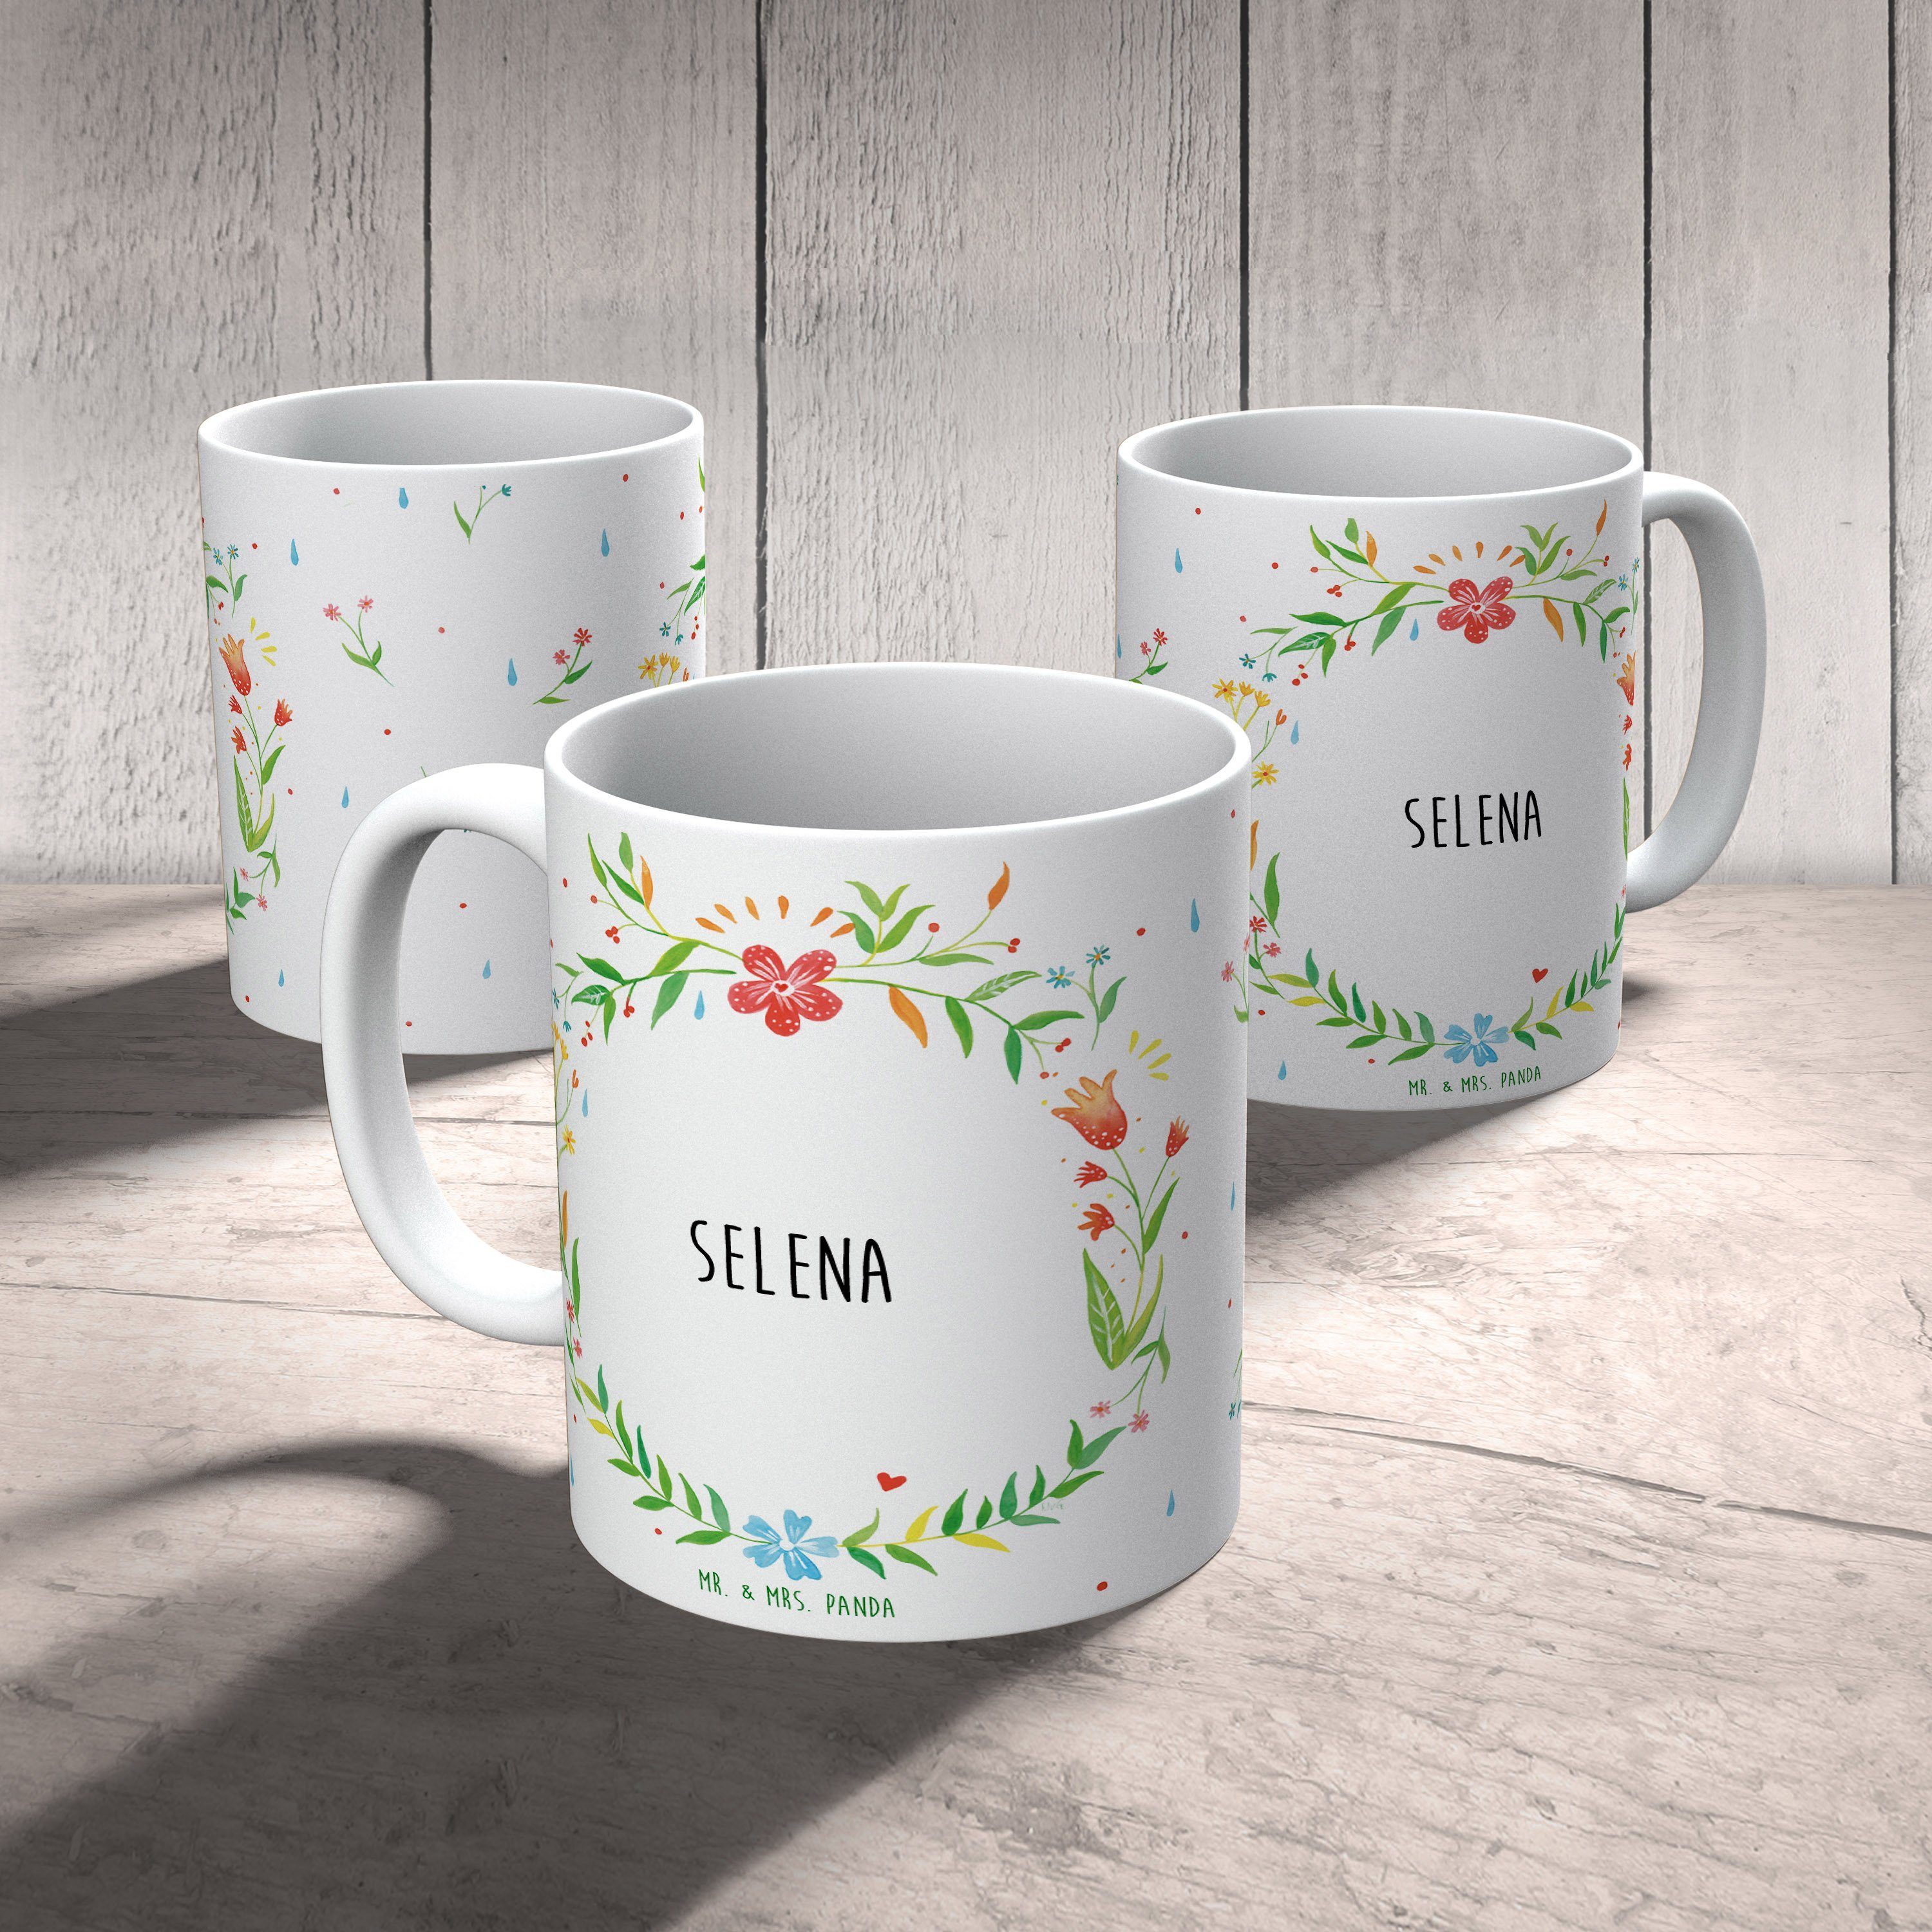 Becher, Teetasse, Geschenk, & Selena Kaffeetasse, - Teebecher, Mo, Tasse Keramik Mrs. Panda Mr. Tasse